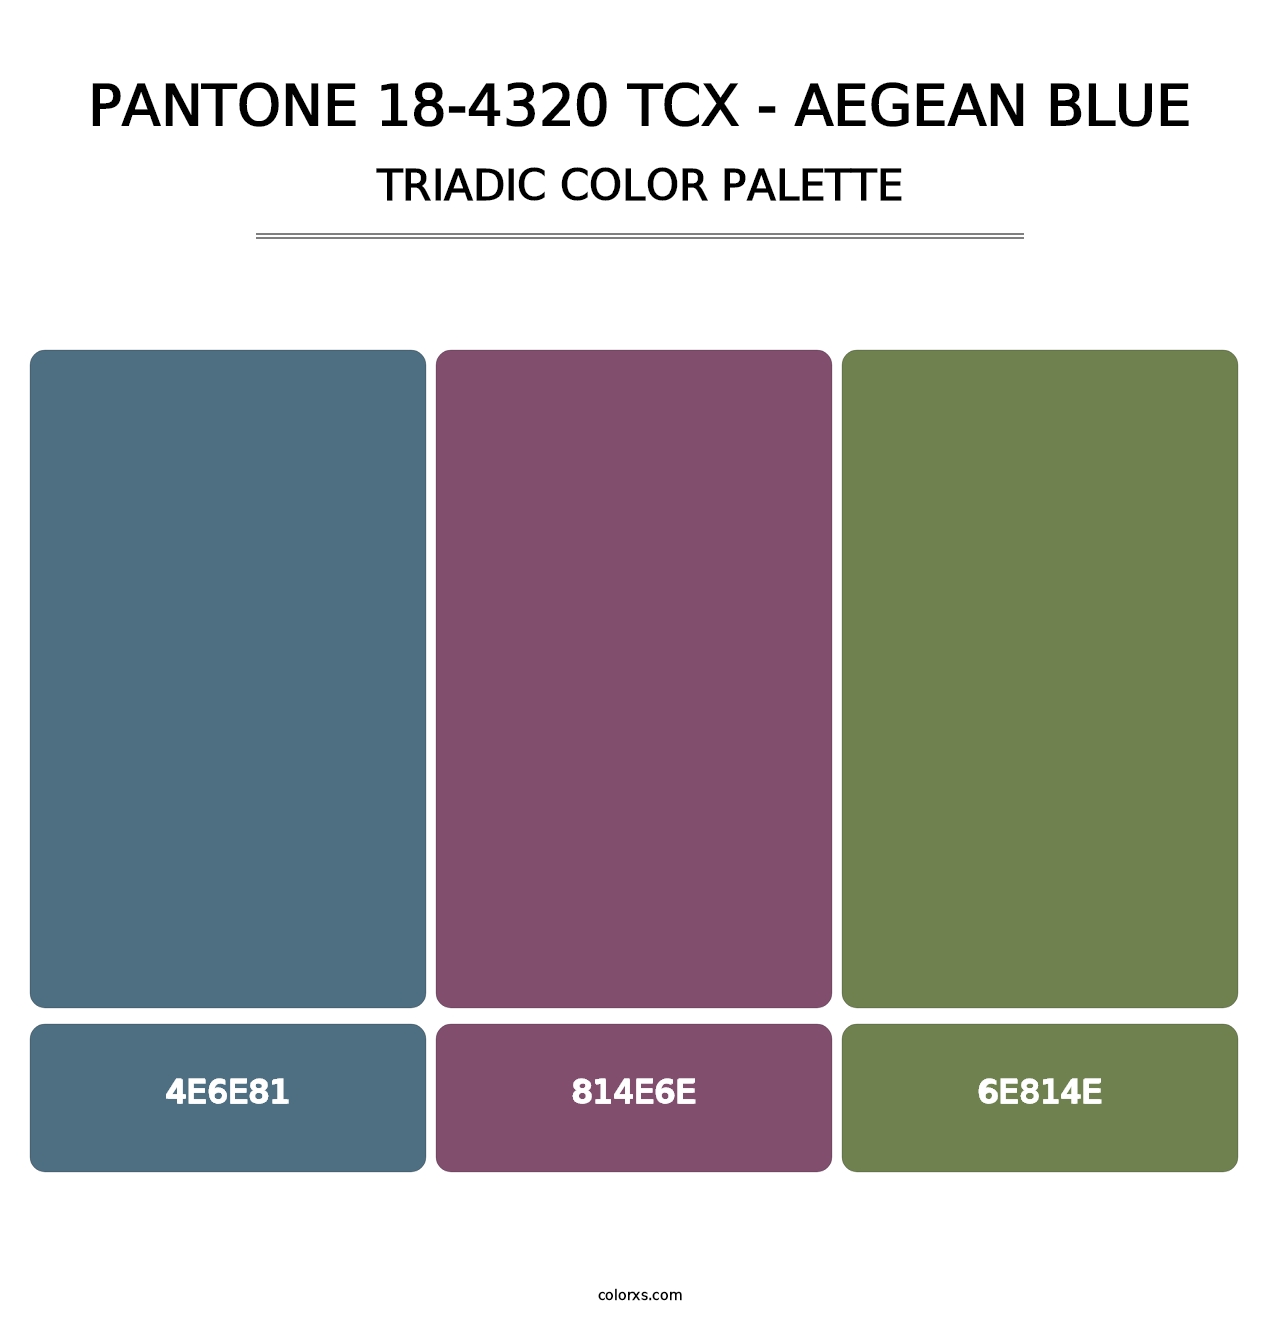 PANTONE 18-4320 TCX - Aegean Blue - Triadic Color Palette